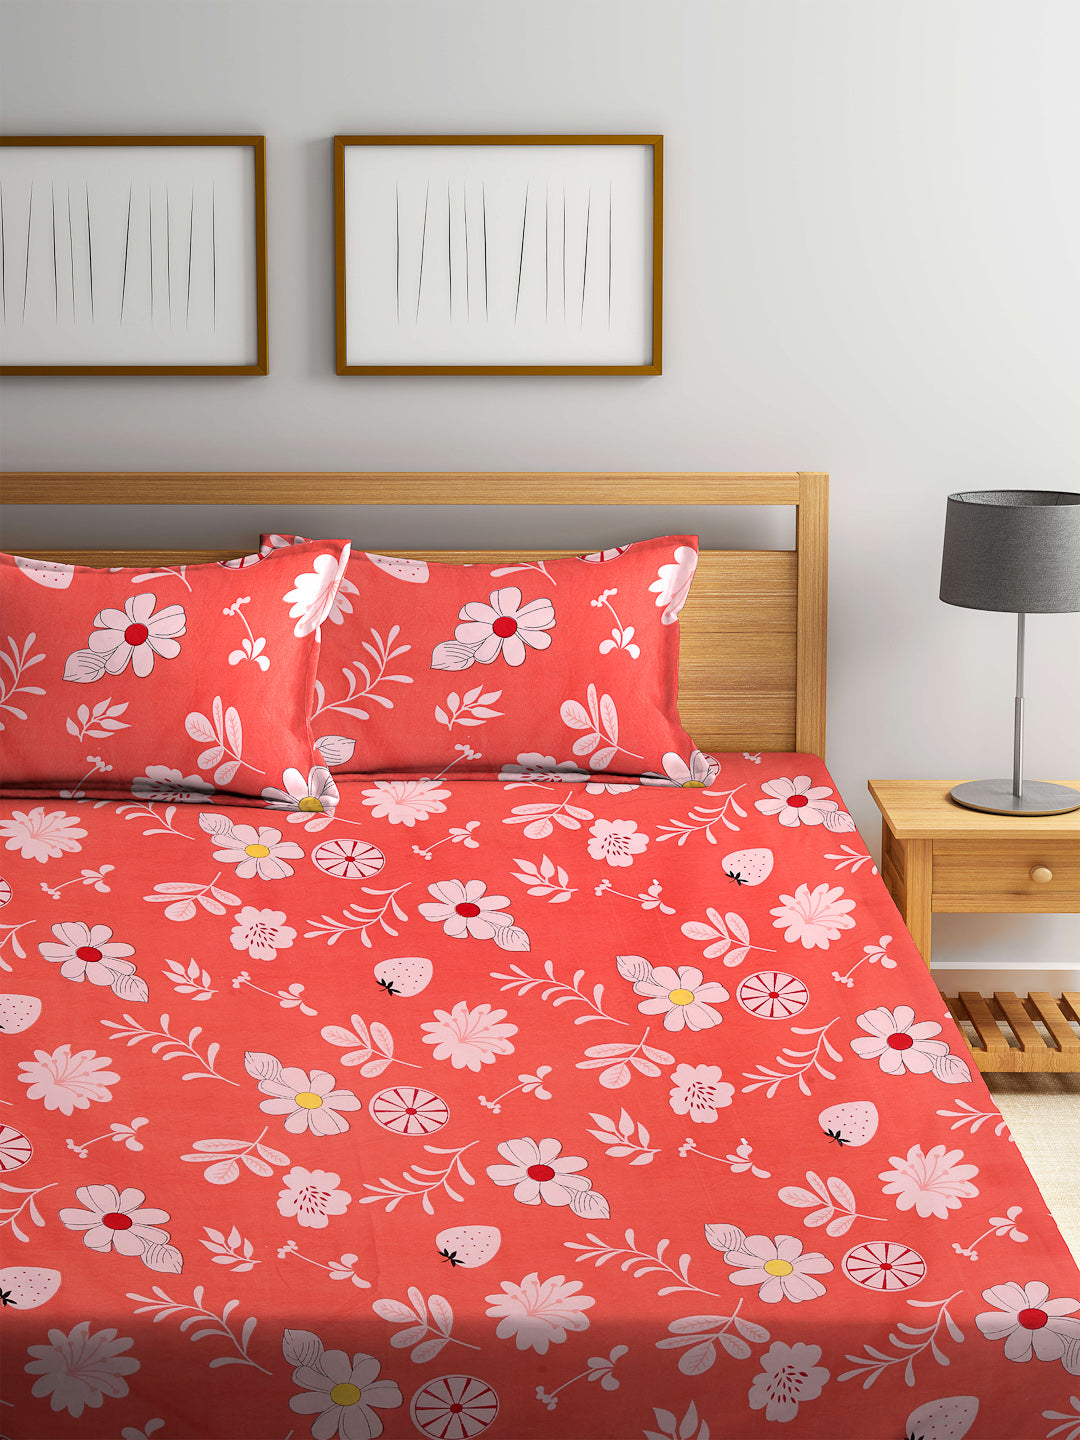 Arrabi Orange Floral TC Cotton Blend King Size Bookfold Bedsheet with 2 Pillow Covers (250 X 220 cm)